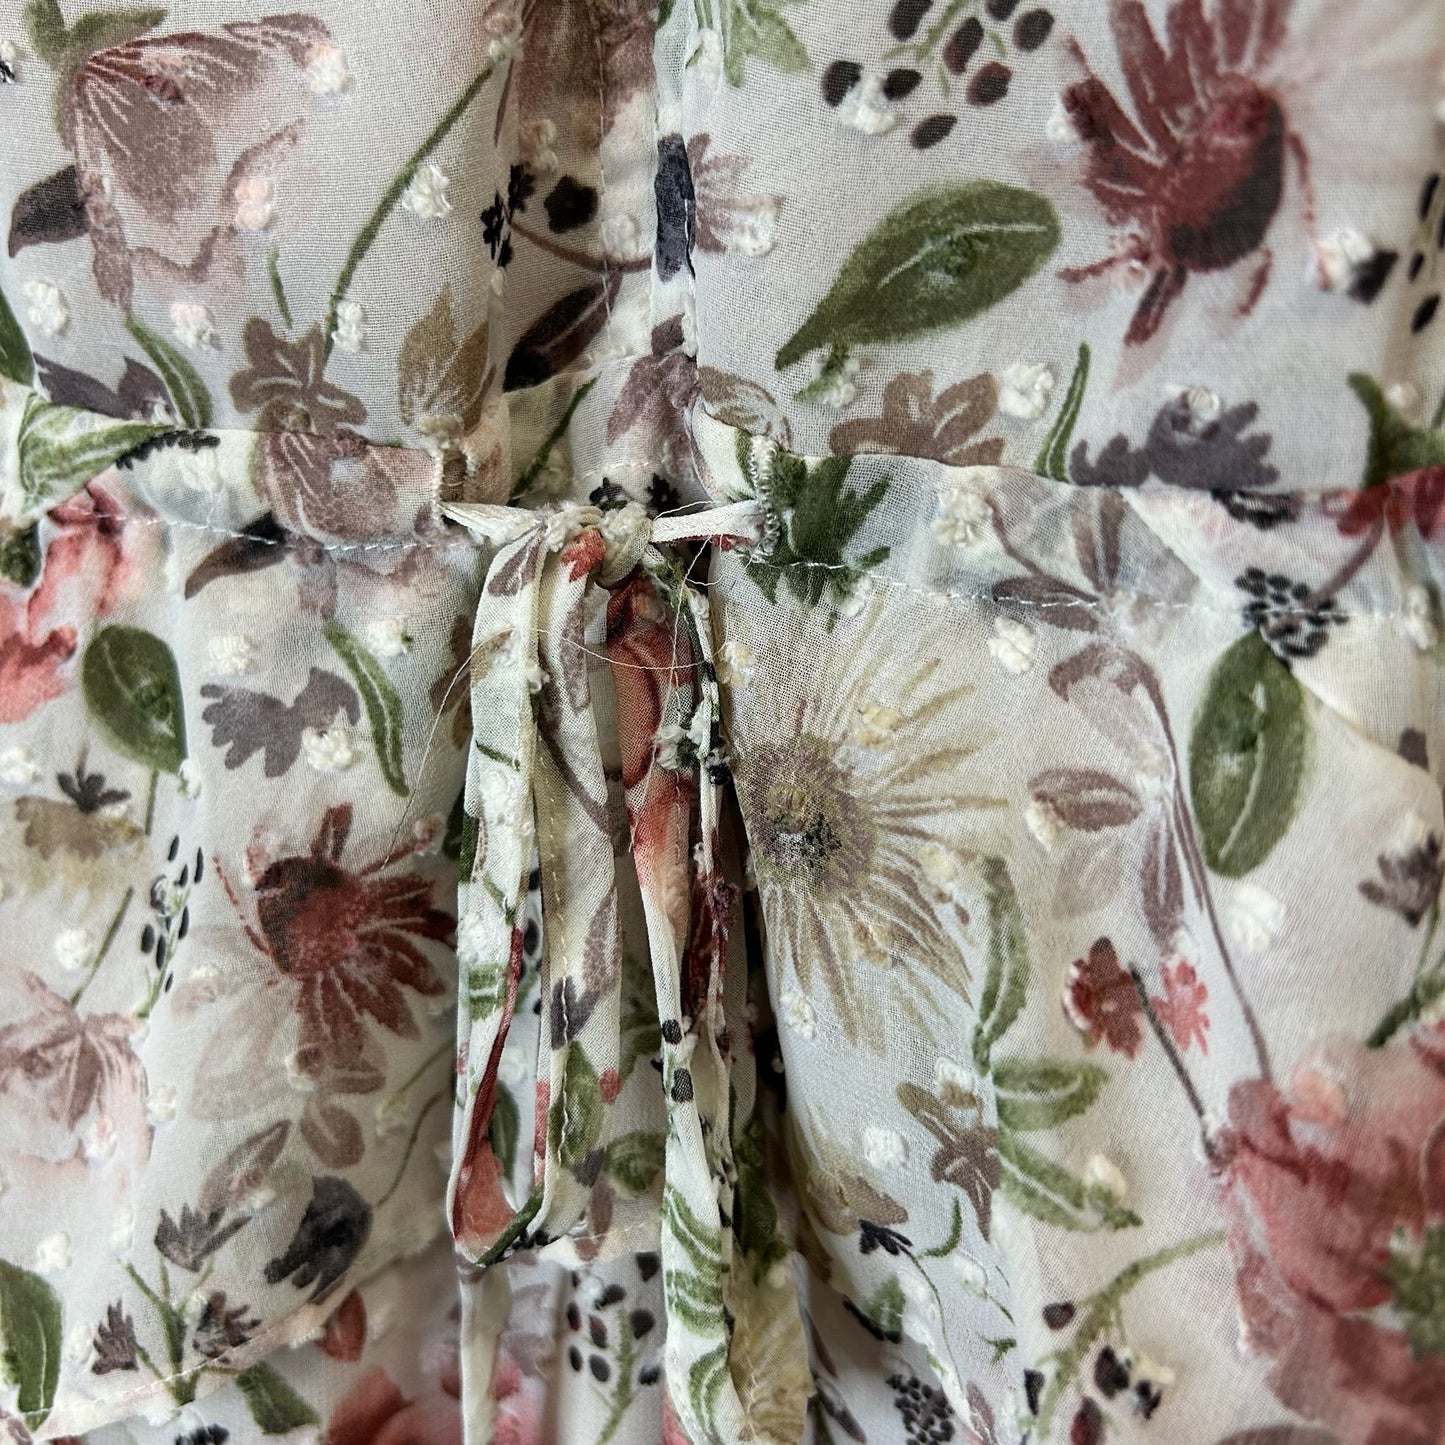 Dress Casual Midi By Matilda Jane  Size: Xs